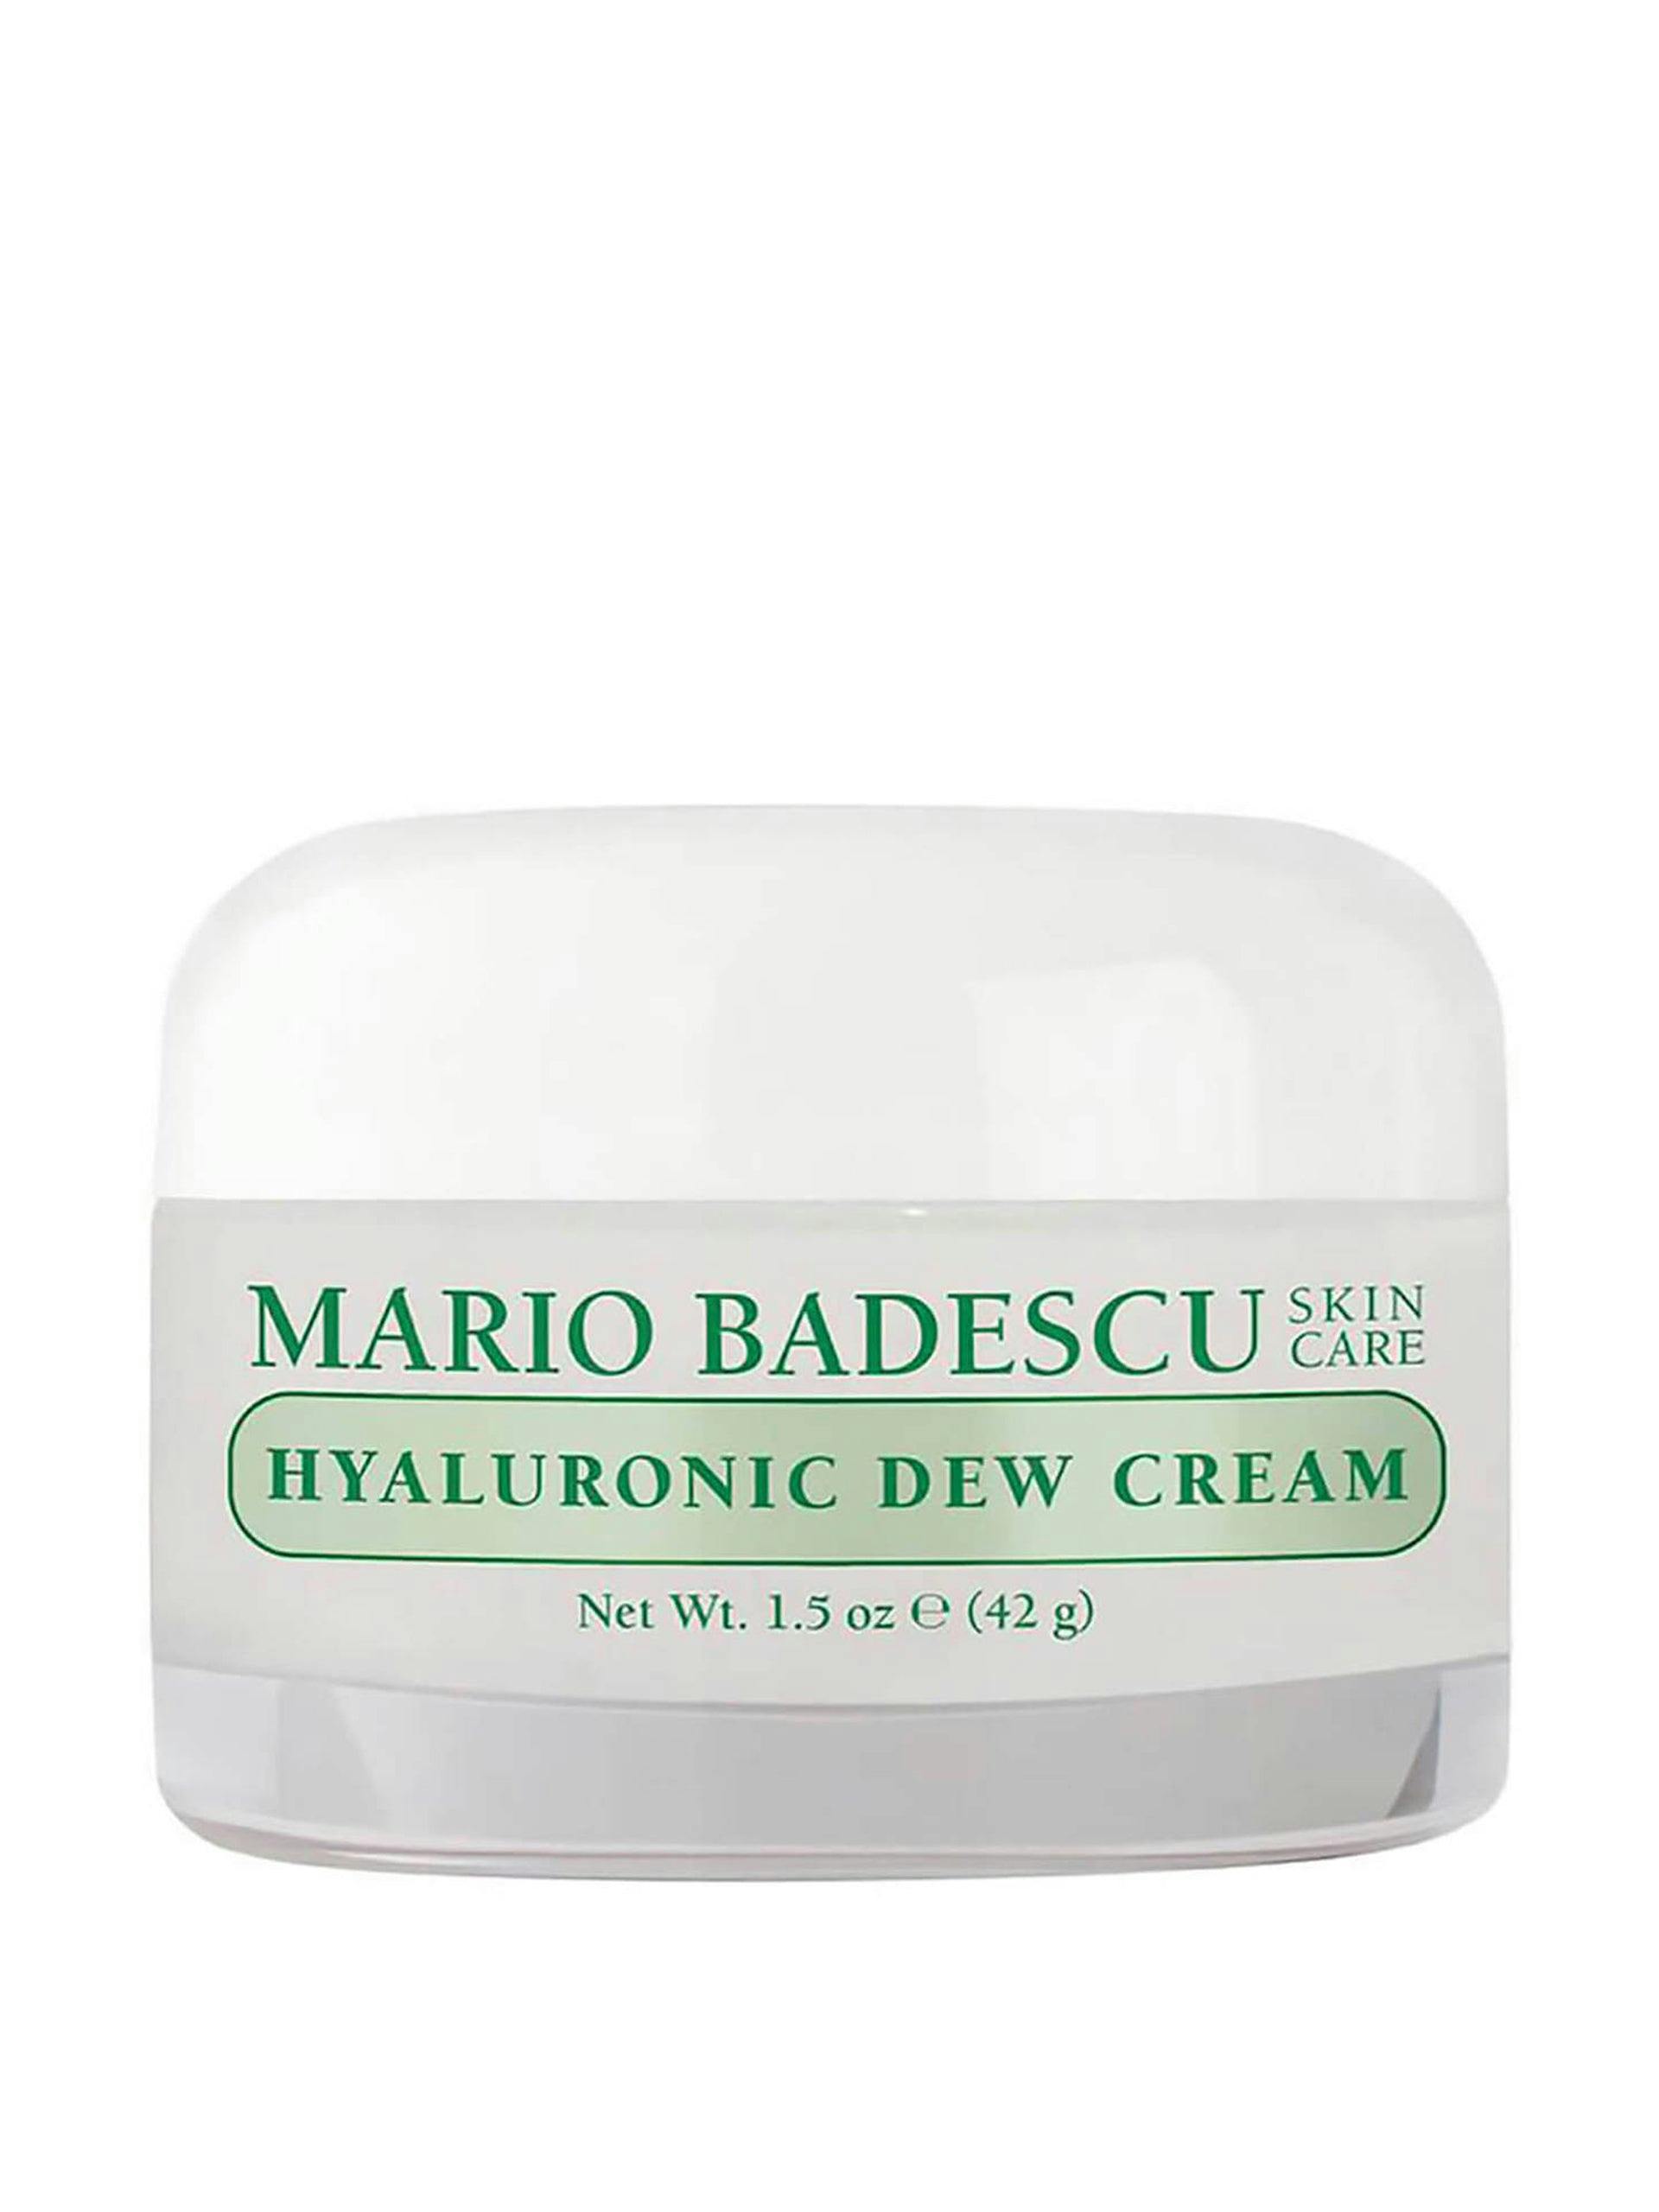 Hyaluronic Dew Cream hydrating moisturiser